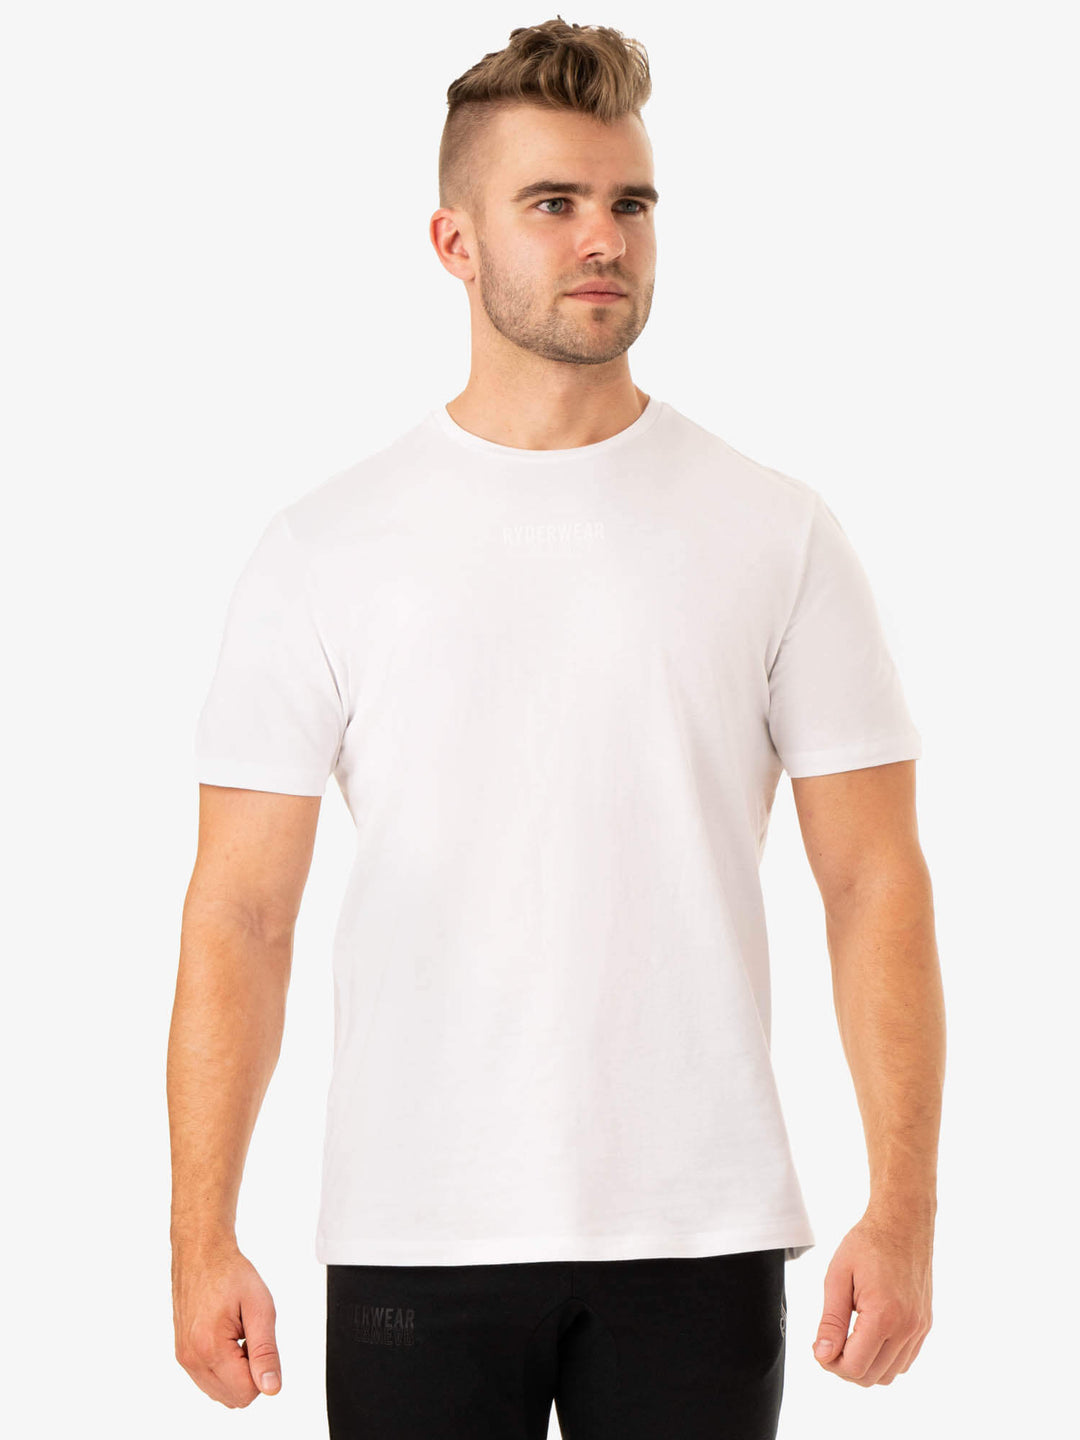 Limitless T-Shirt - White Clothing Ryderwear 